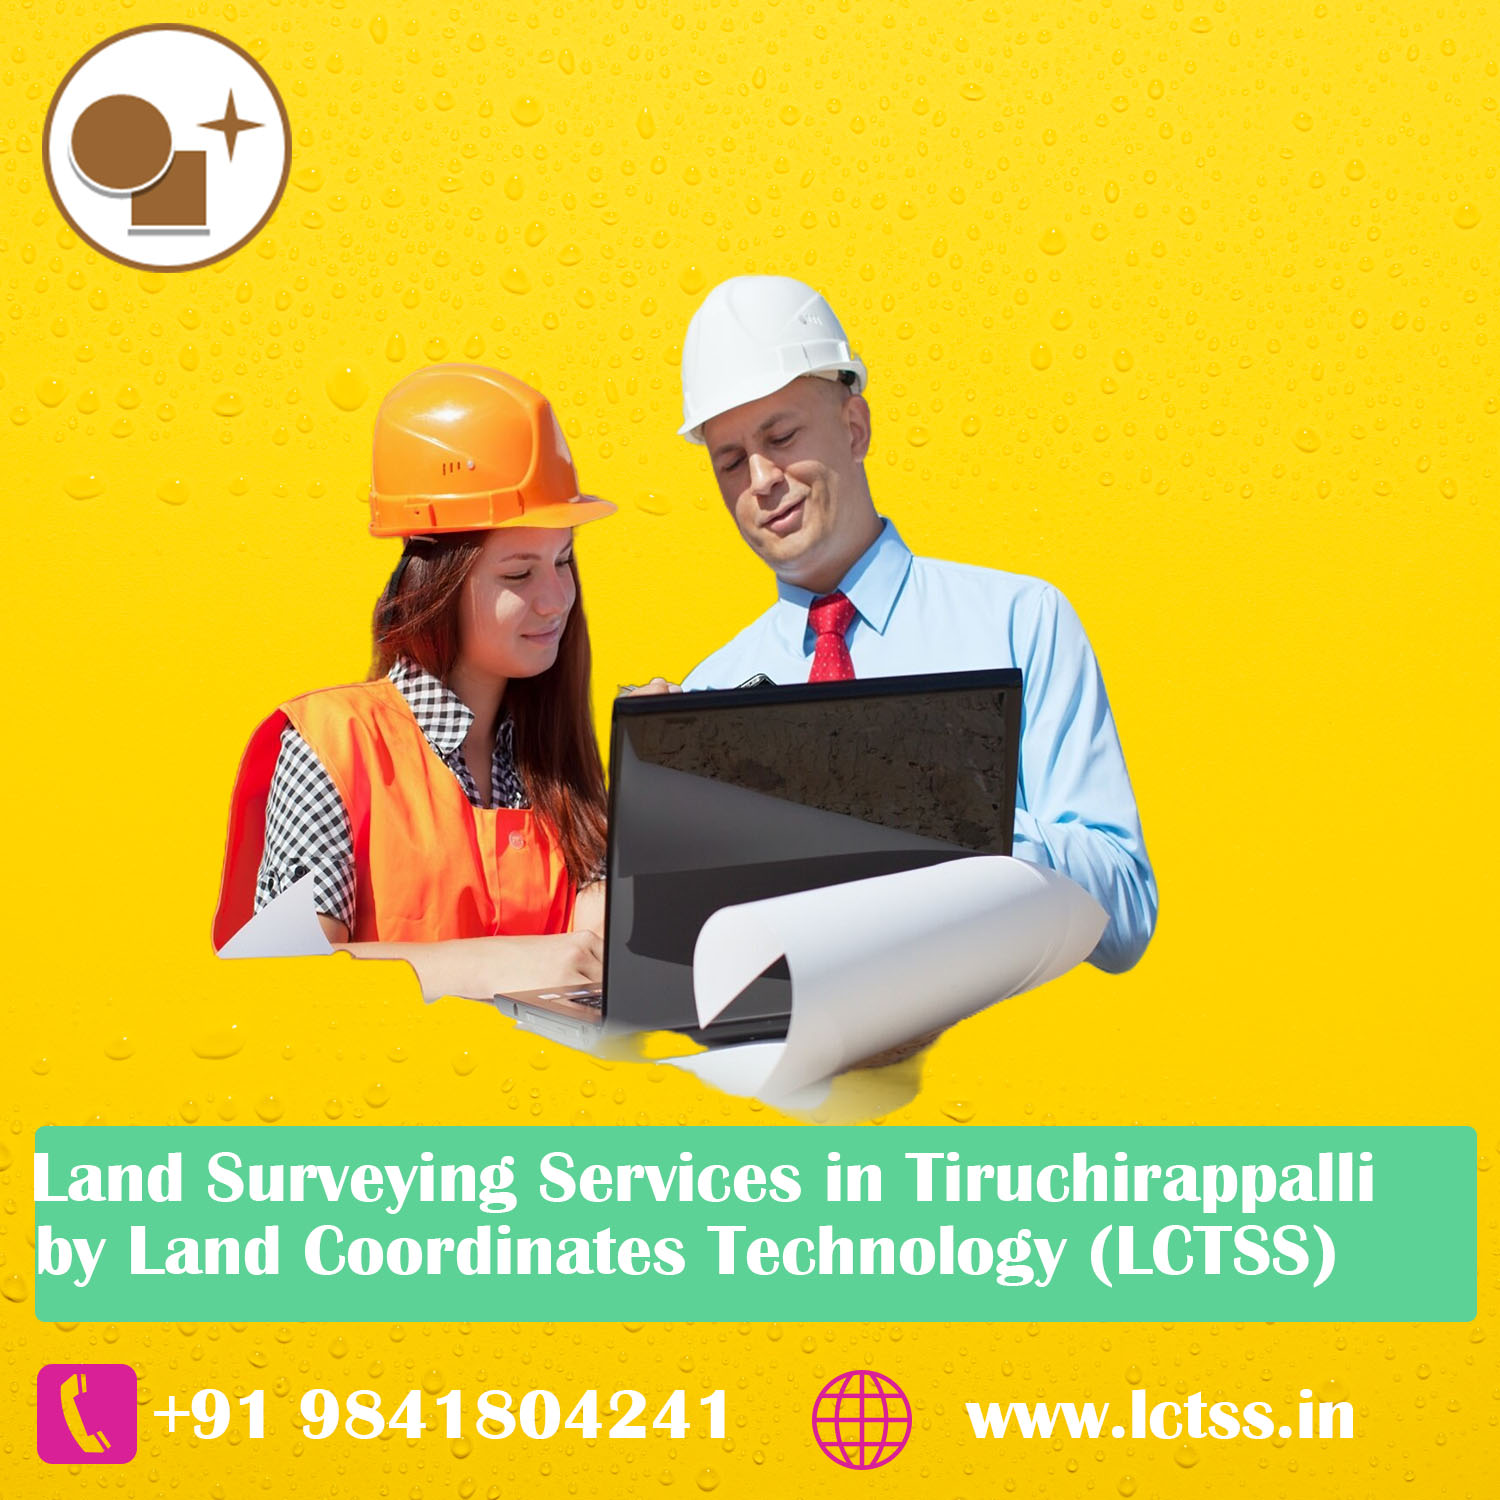 Land Surveying Services in Tiruchirappalli, Tamil Nadu by Land Coordinates Technology (LCTSS)